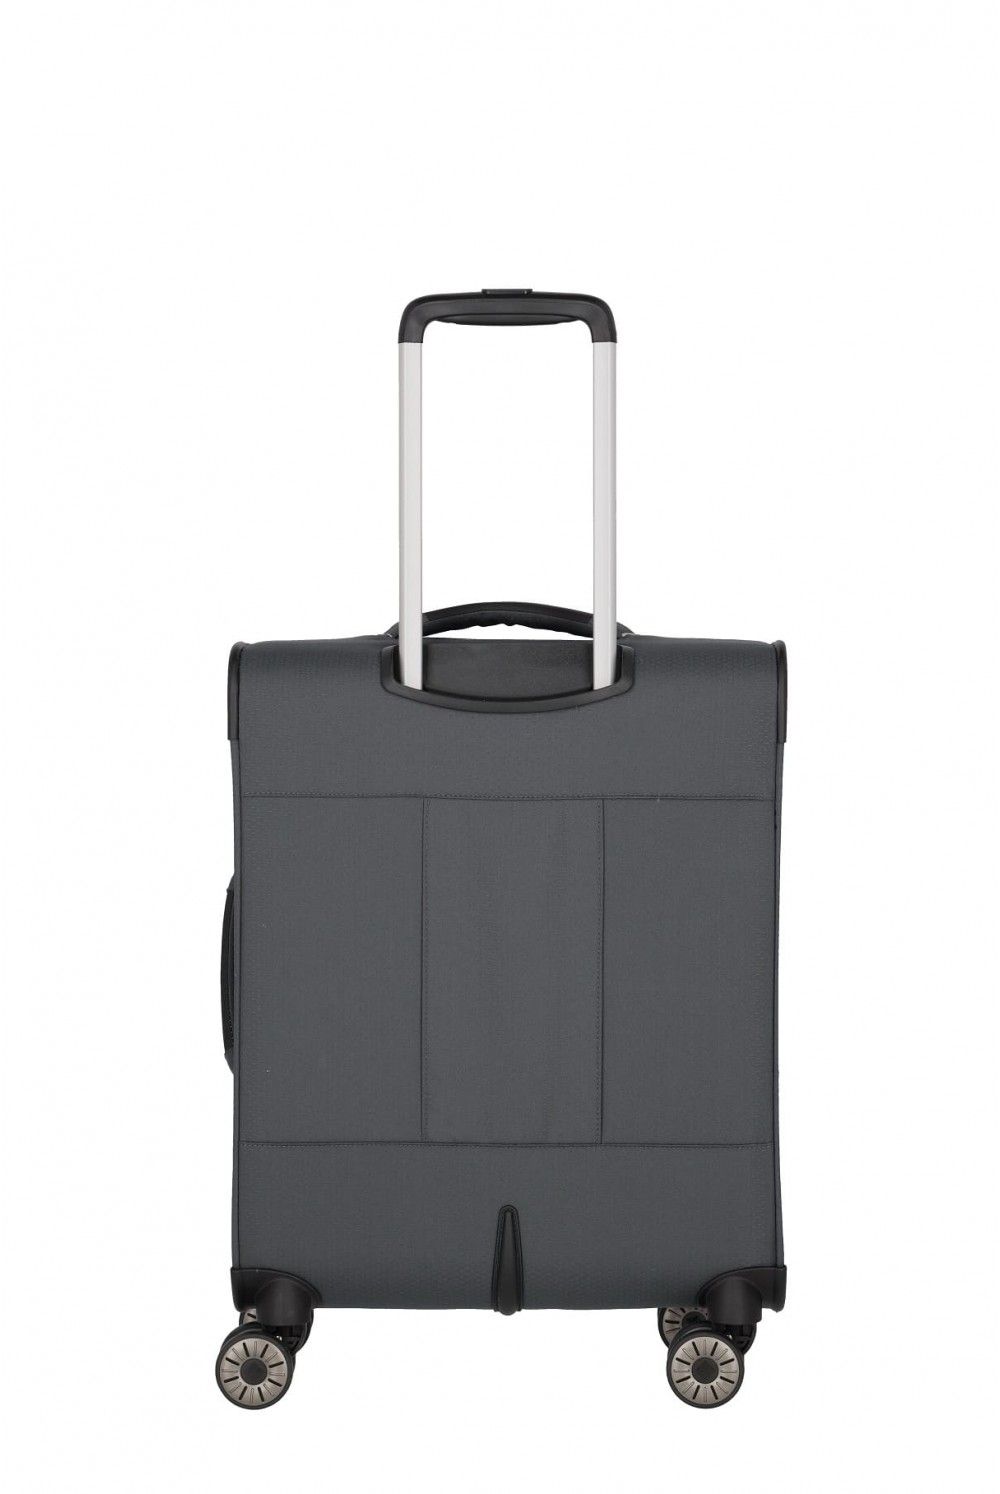 Hand luggage suitcase Travelite Skaii 55cm 4 wheels